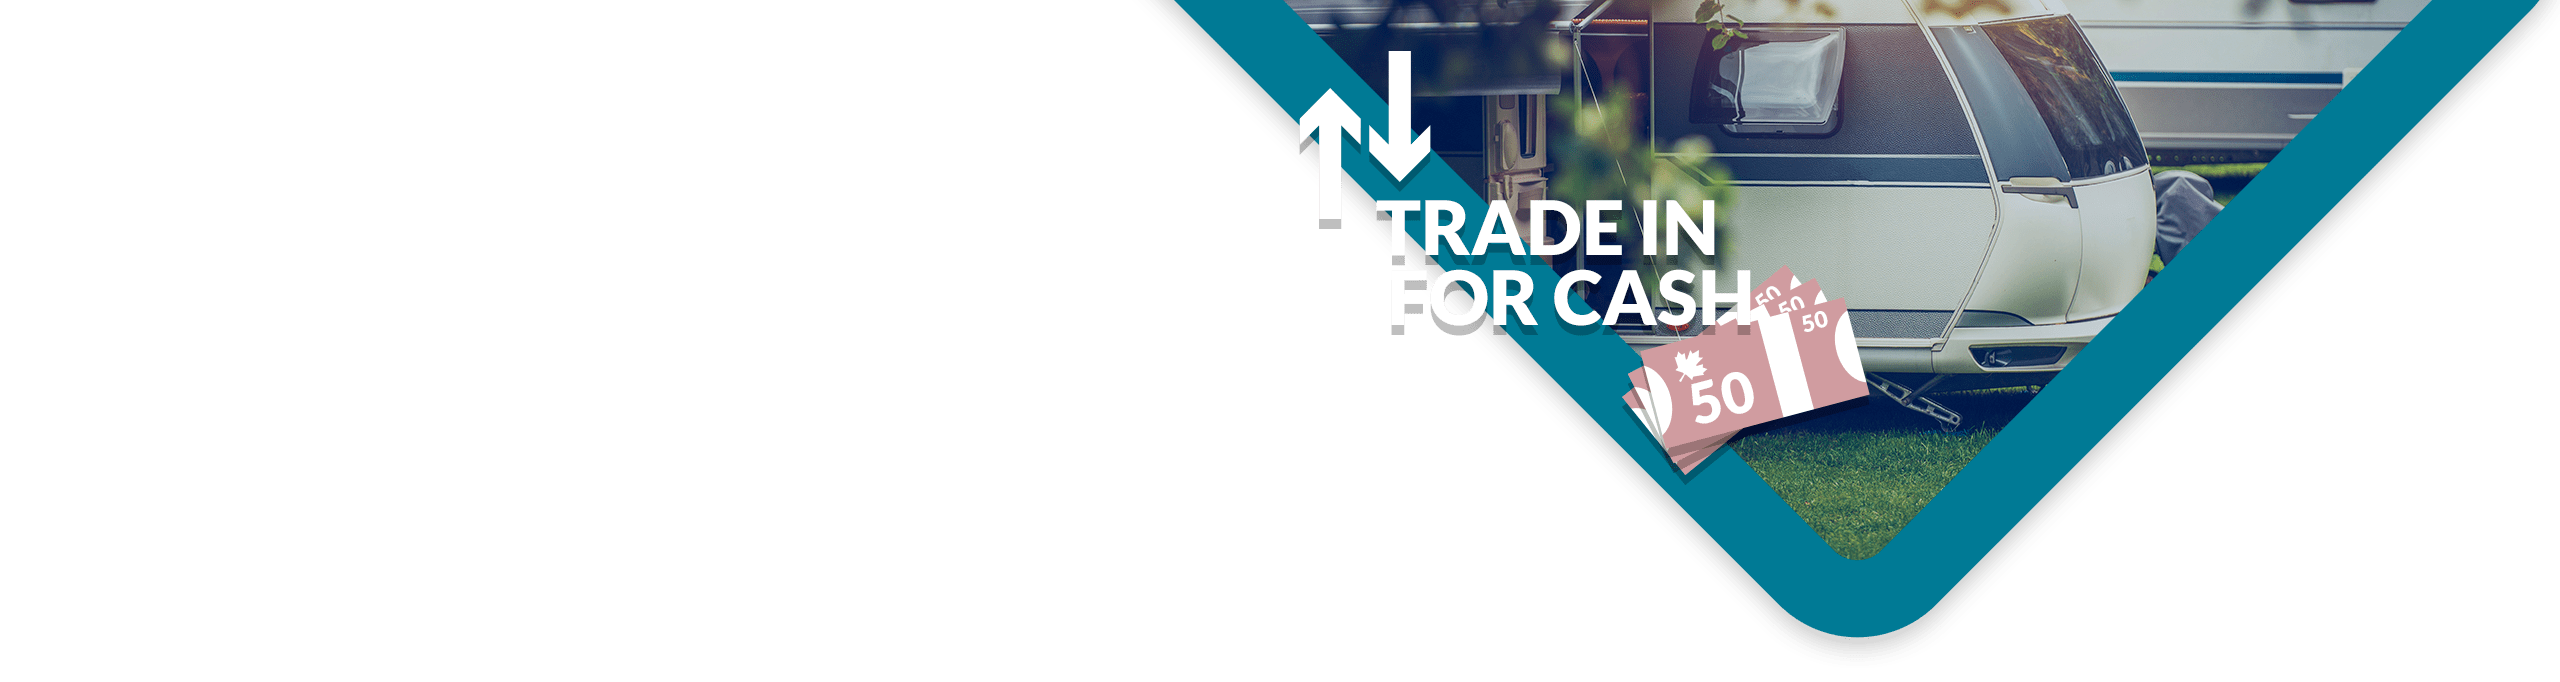 slider-sellers-trade-in-v1b-min